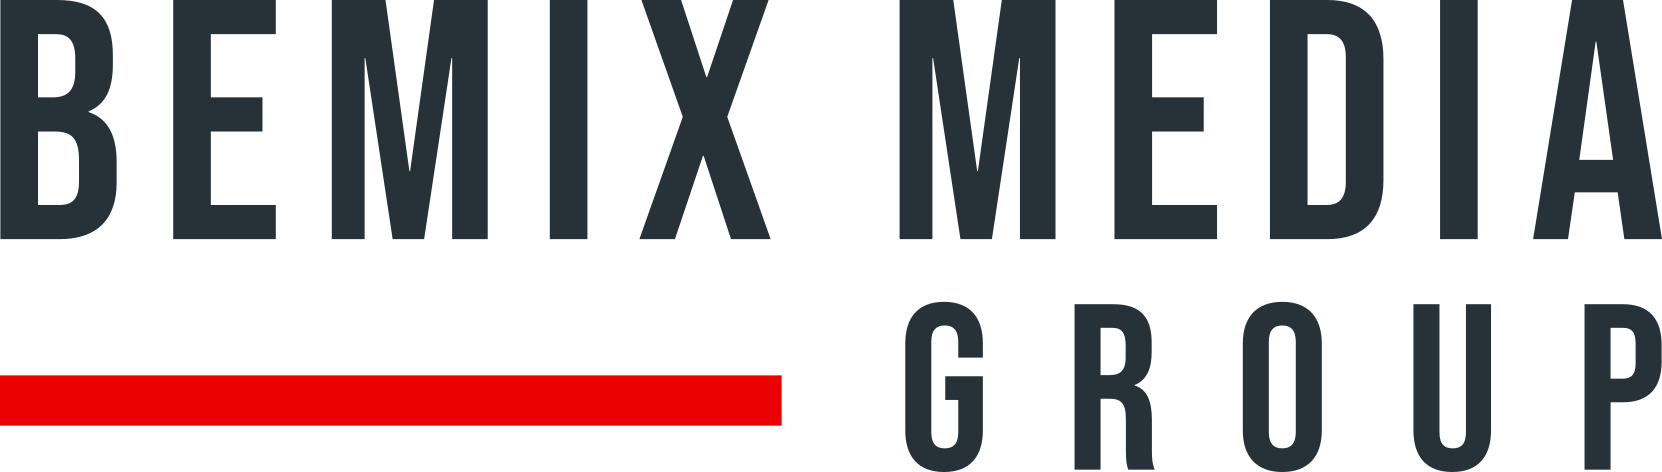 Bemix Media Group